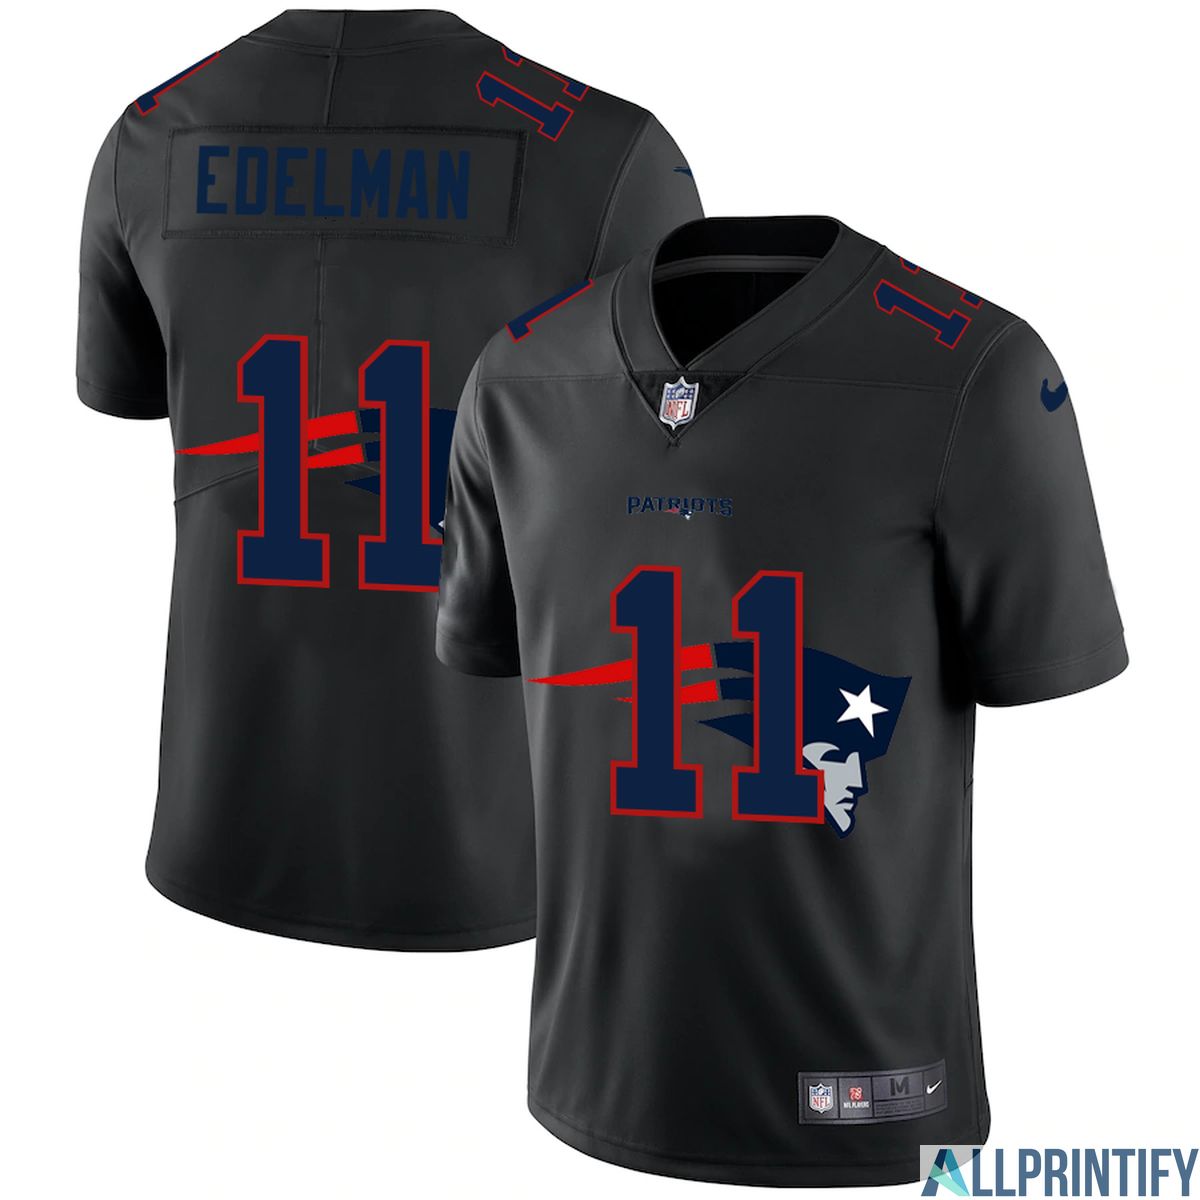 Julian Edelman New England Patriots 11 Limited Player Jersey